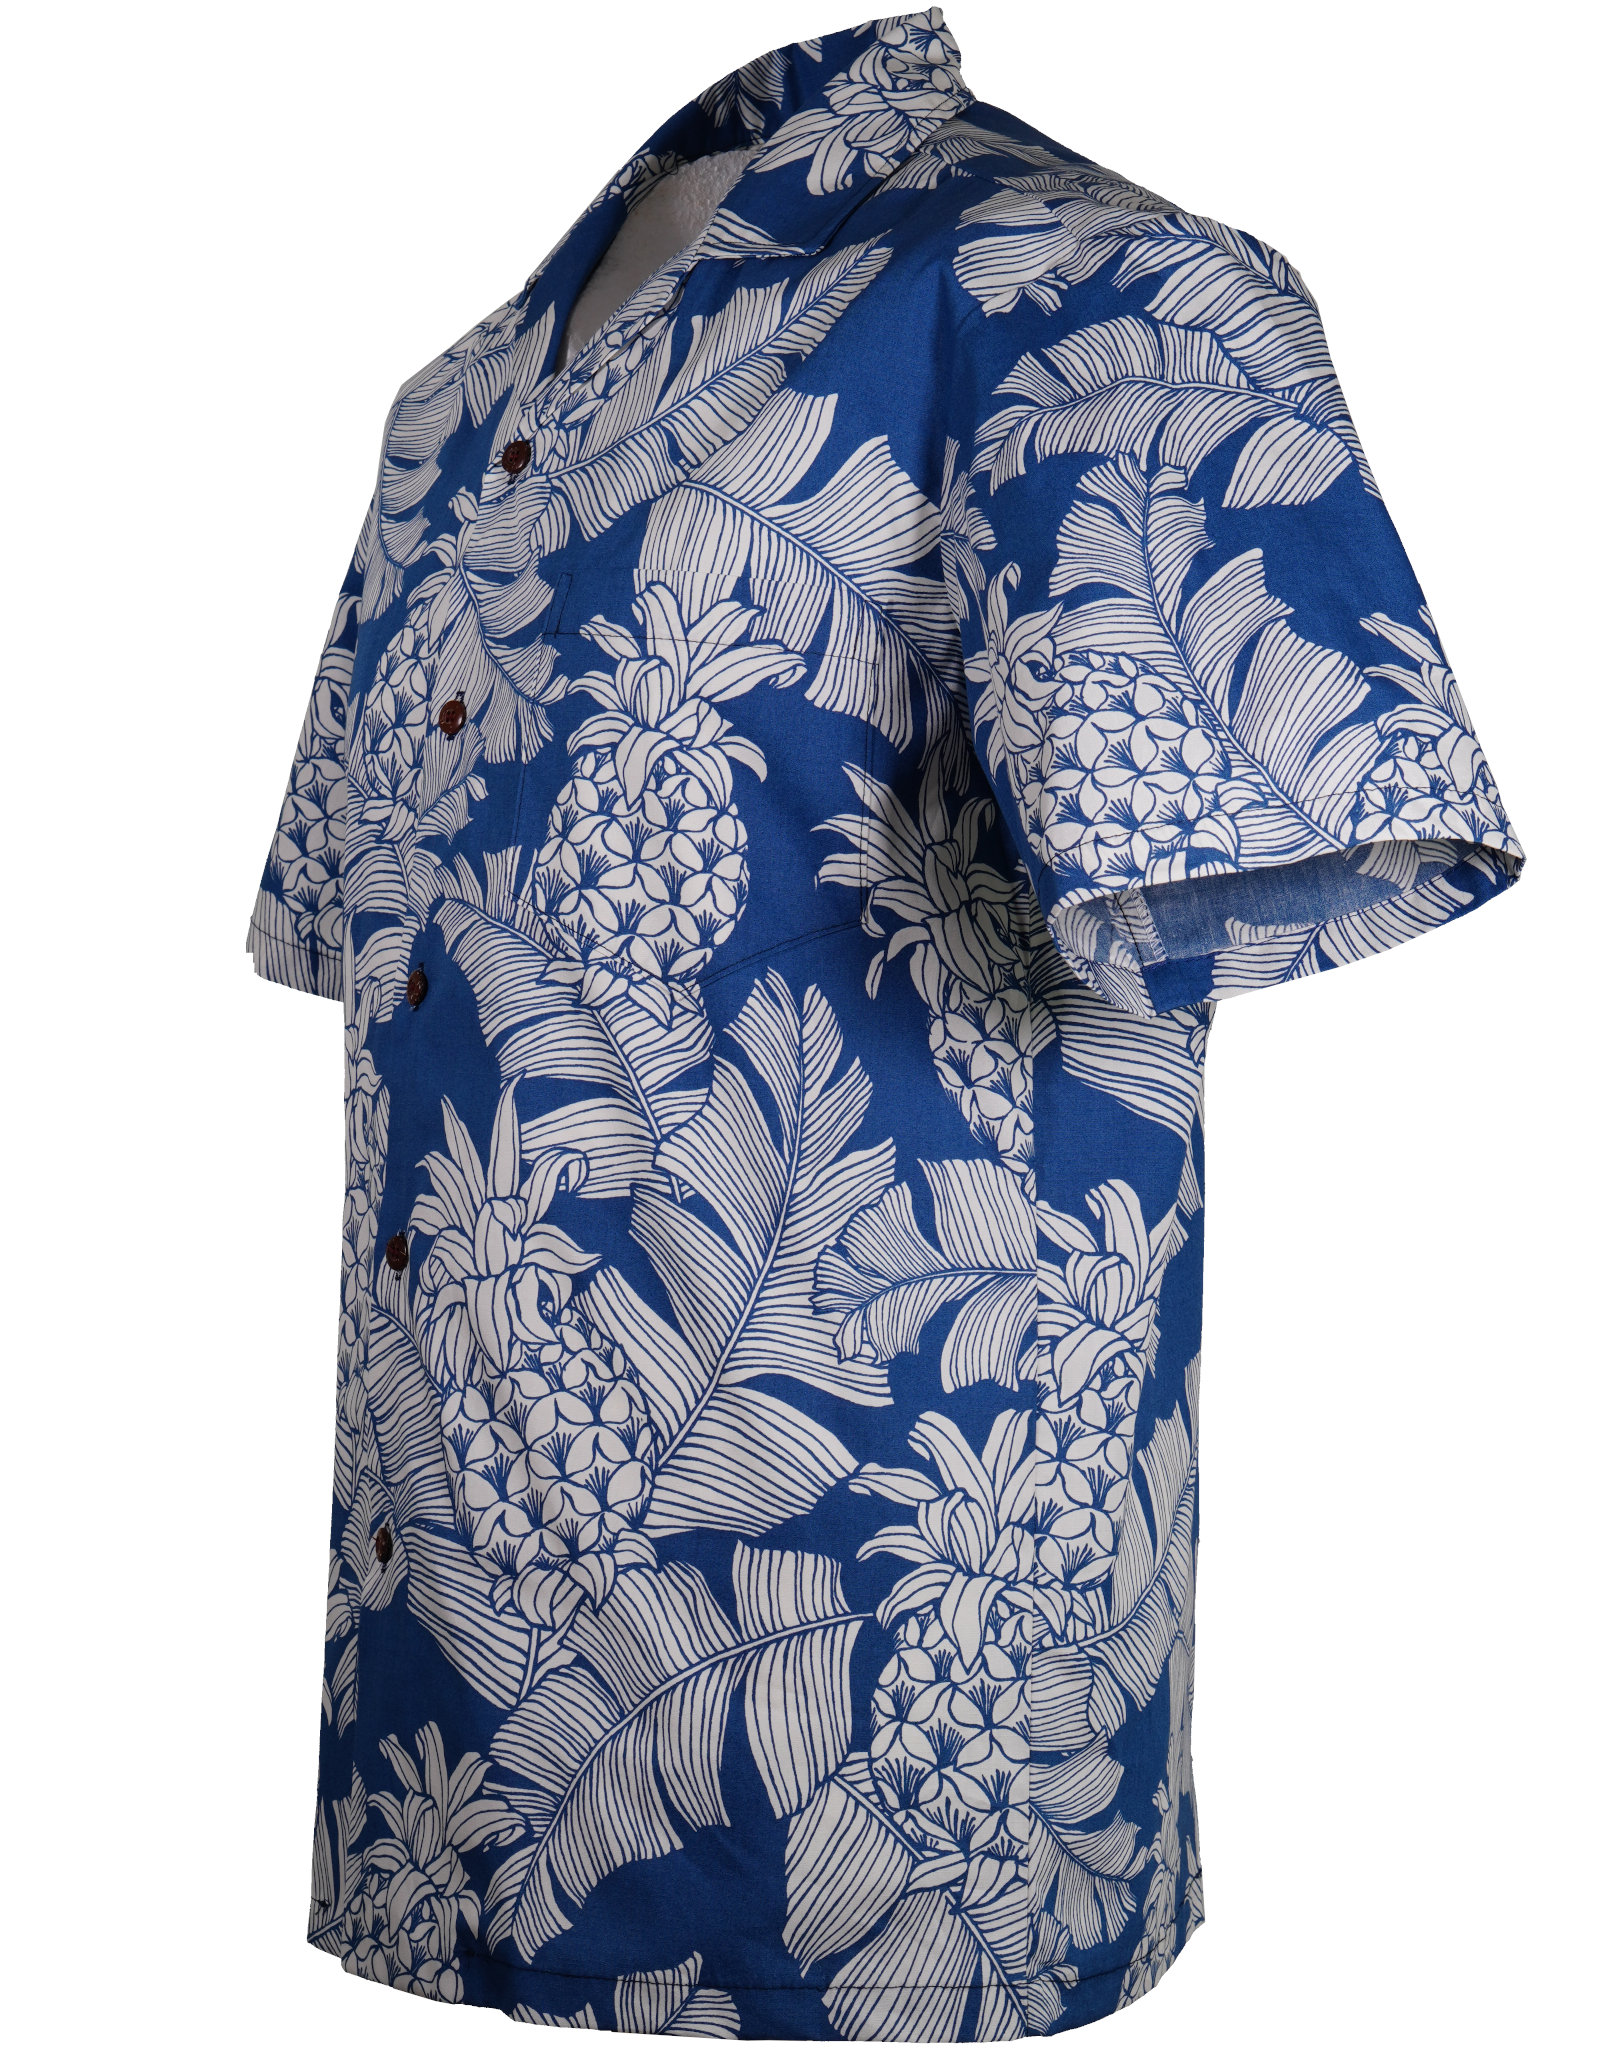 Original Hawaiihemd -VintagePina-